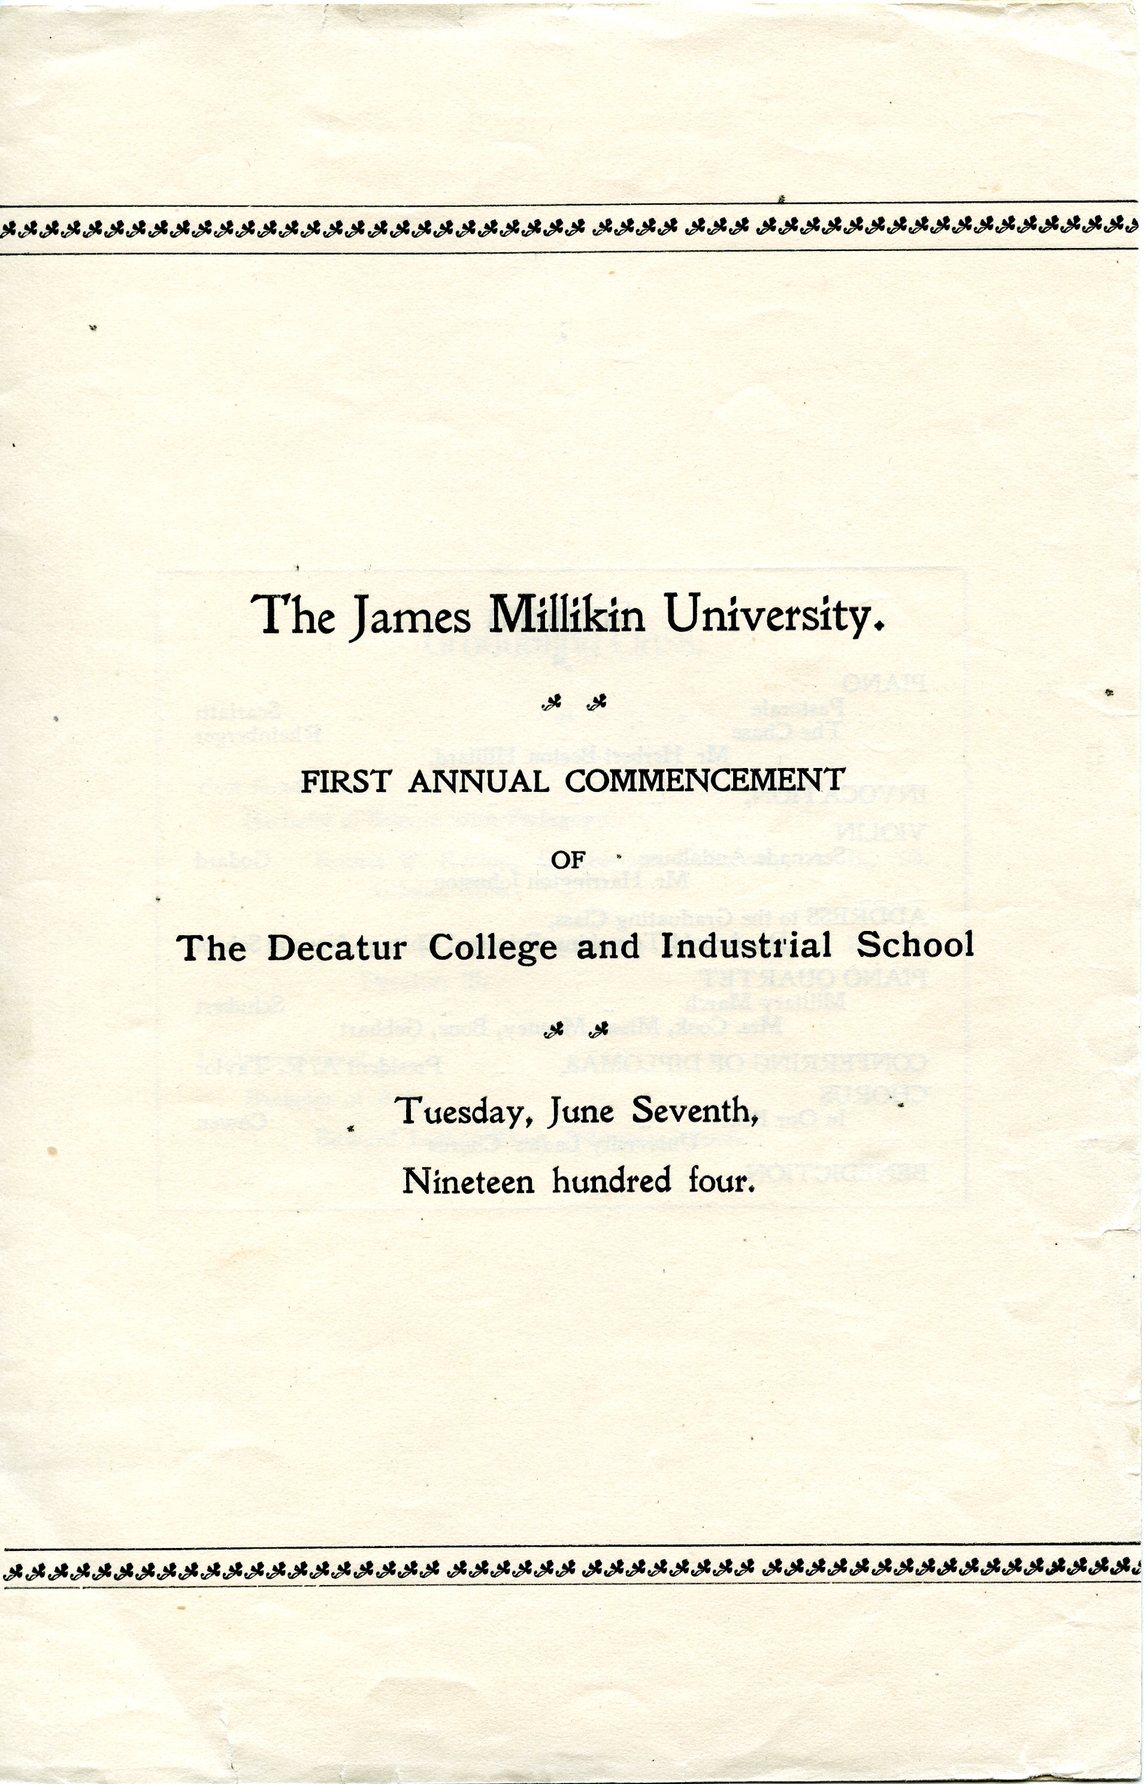 1904 Commencement program cover